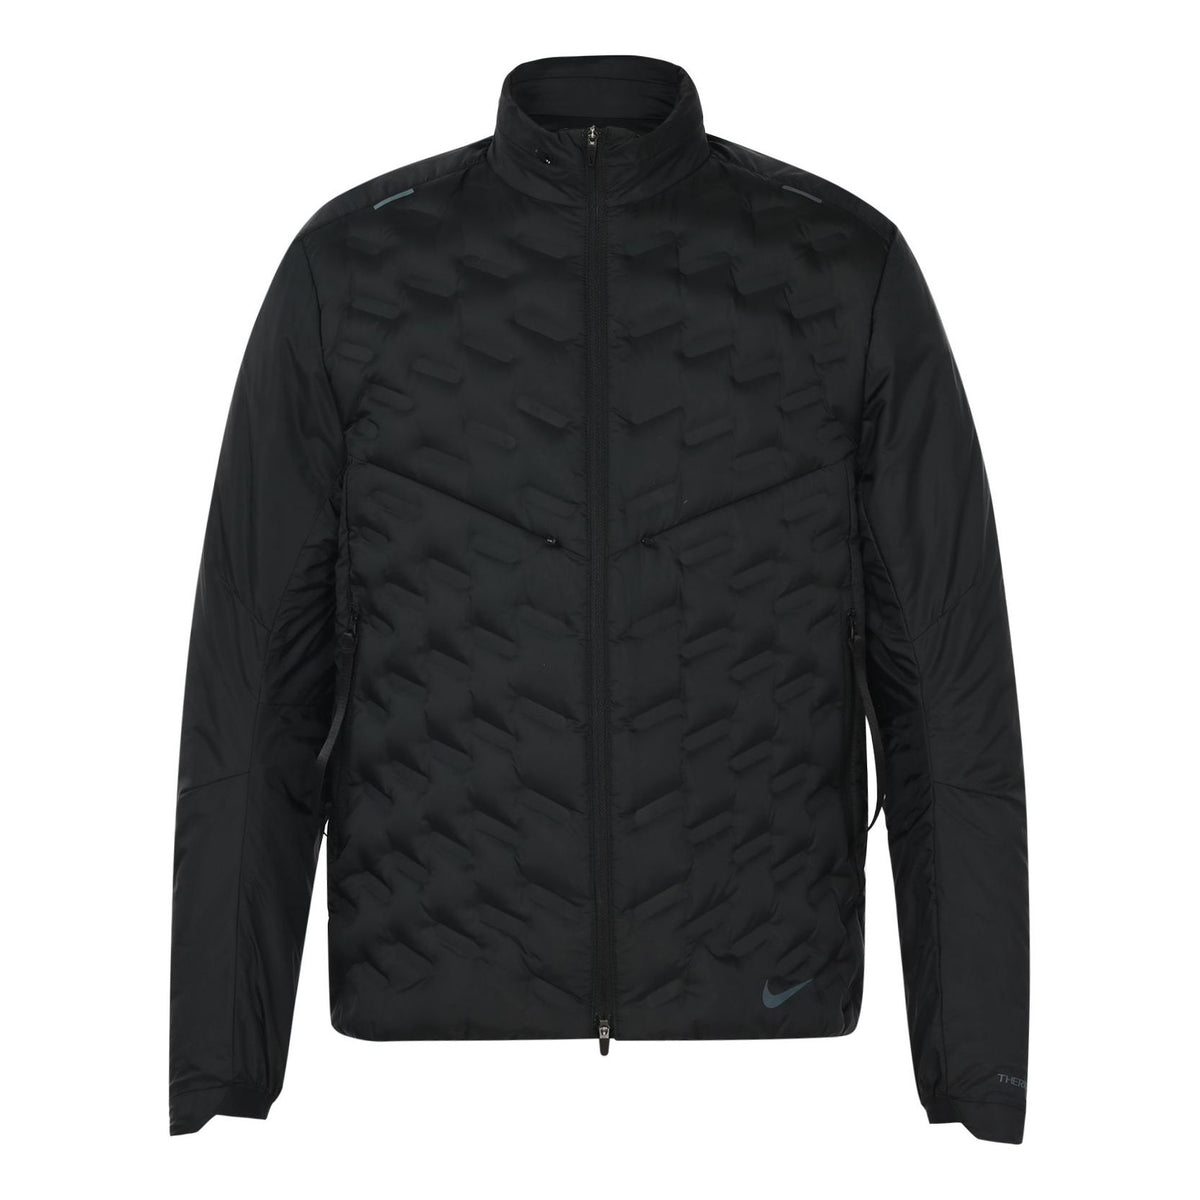 Louis Vuitton x NBA Leather Hybrid Jacket Black Men's - FW21 - US